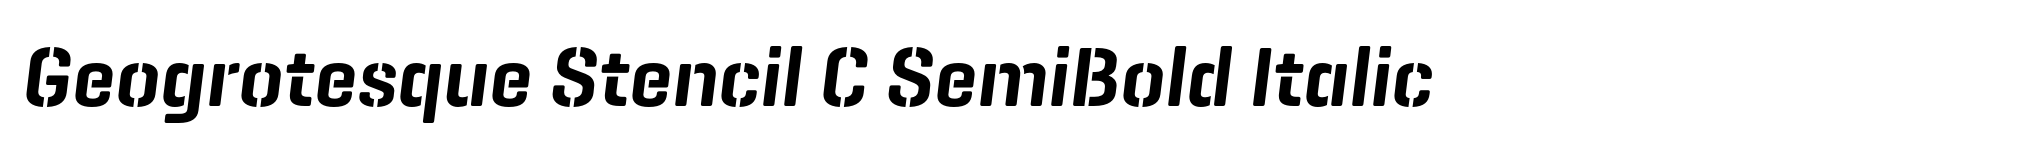 Geogrotesque Stencil C SemiBold Italic image